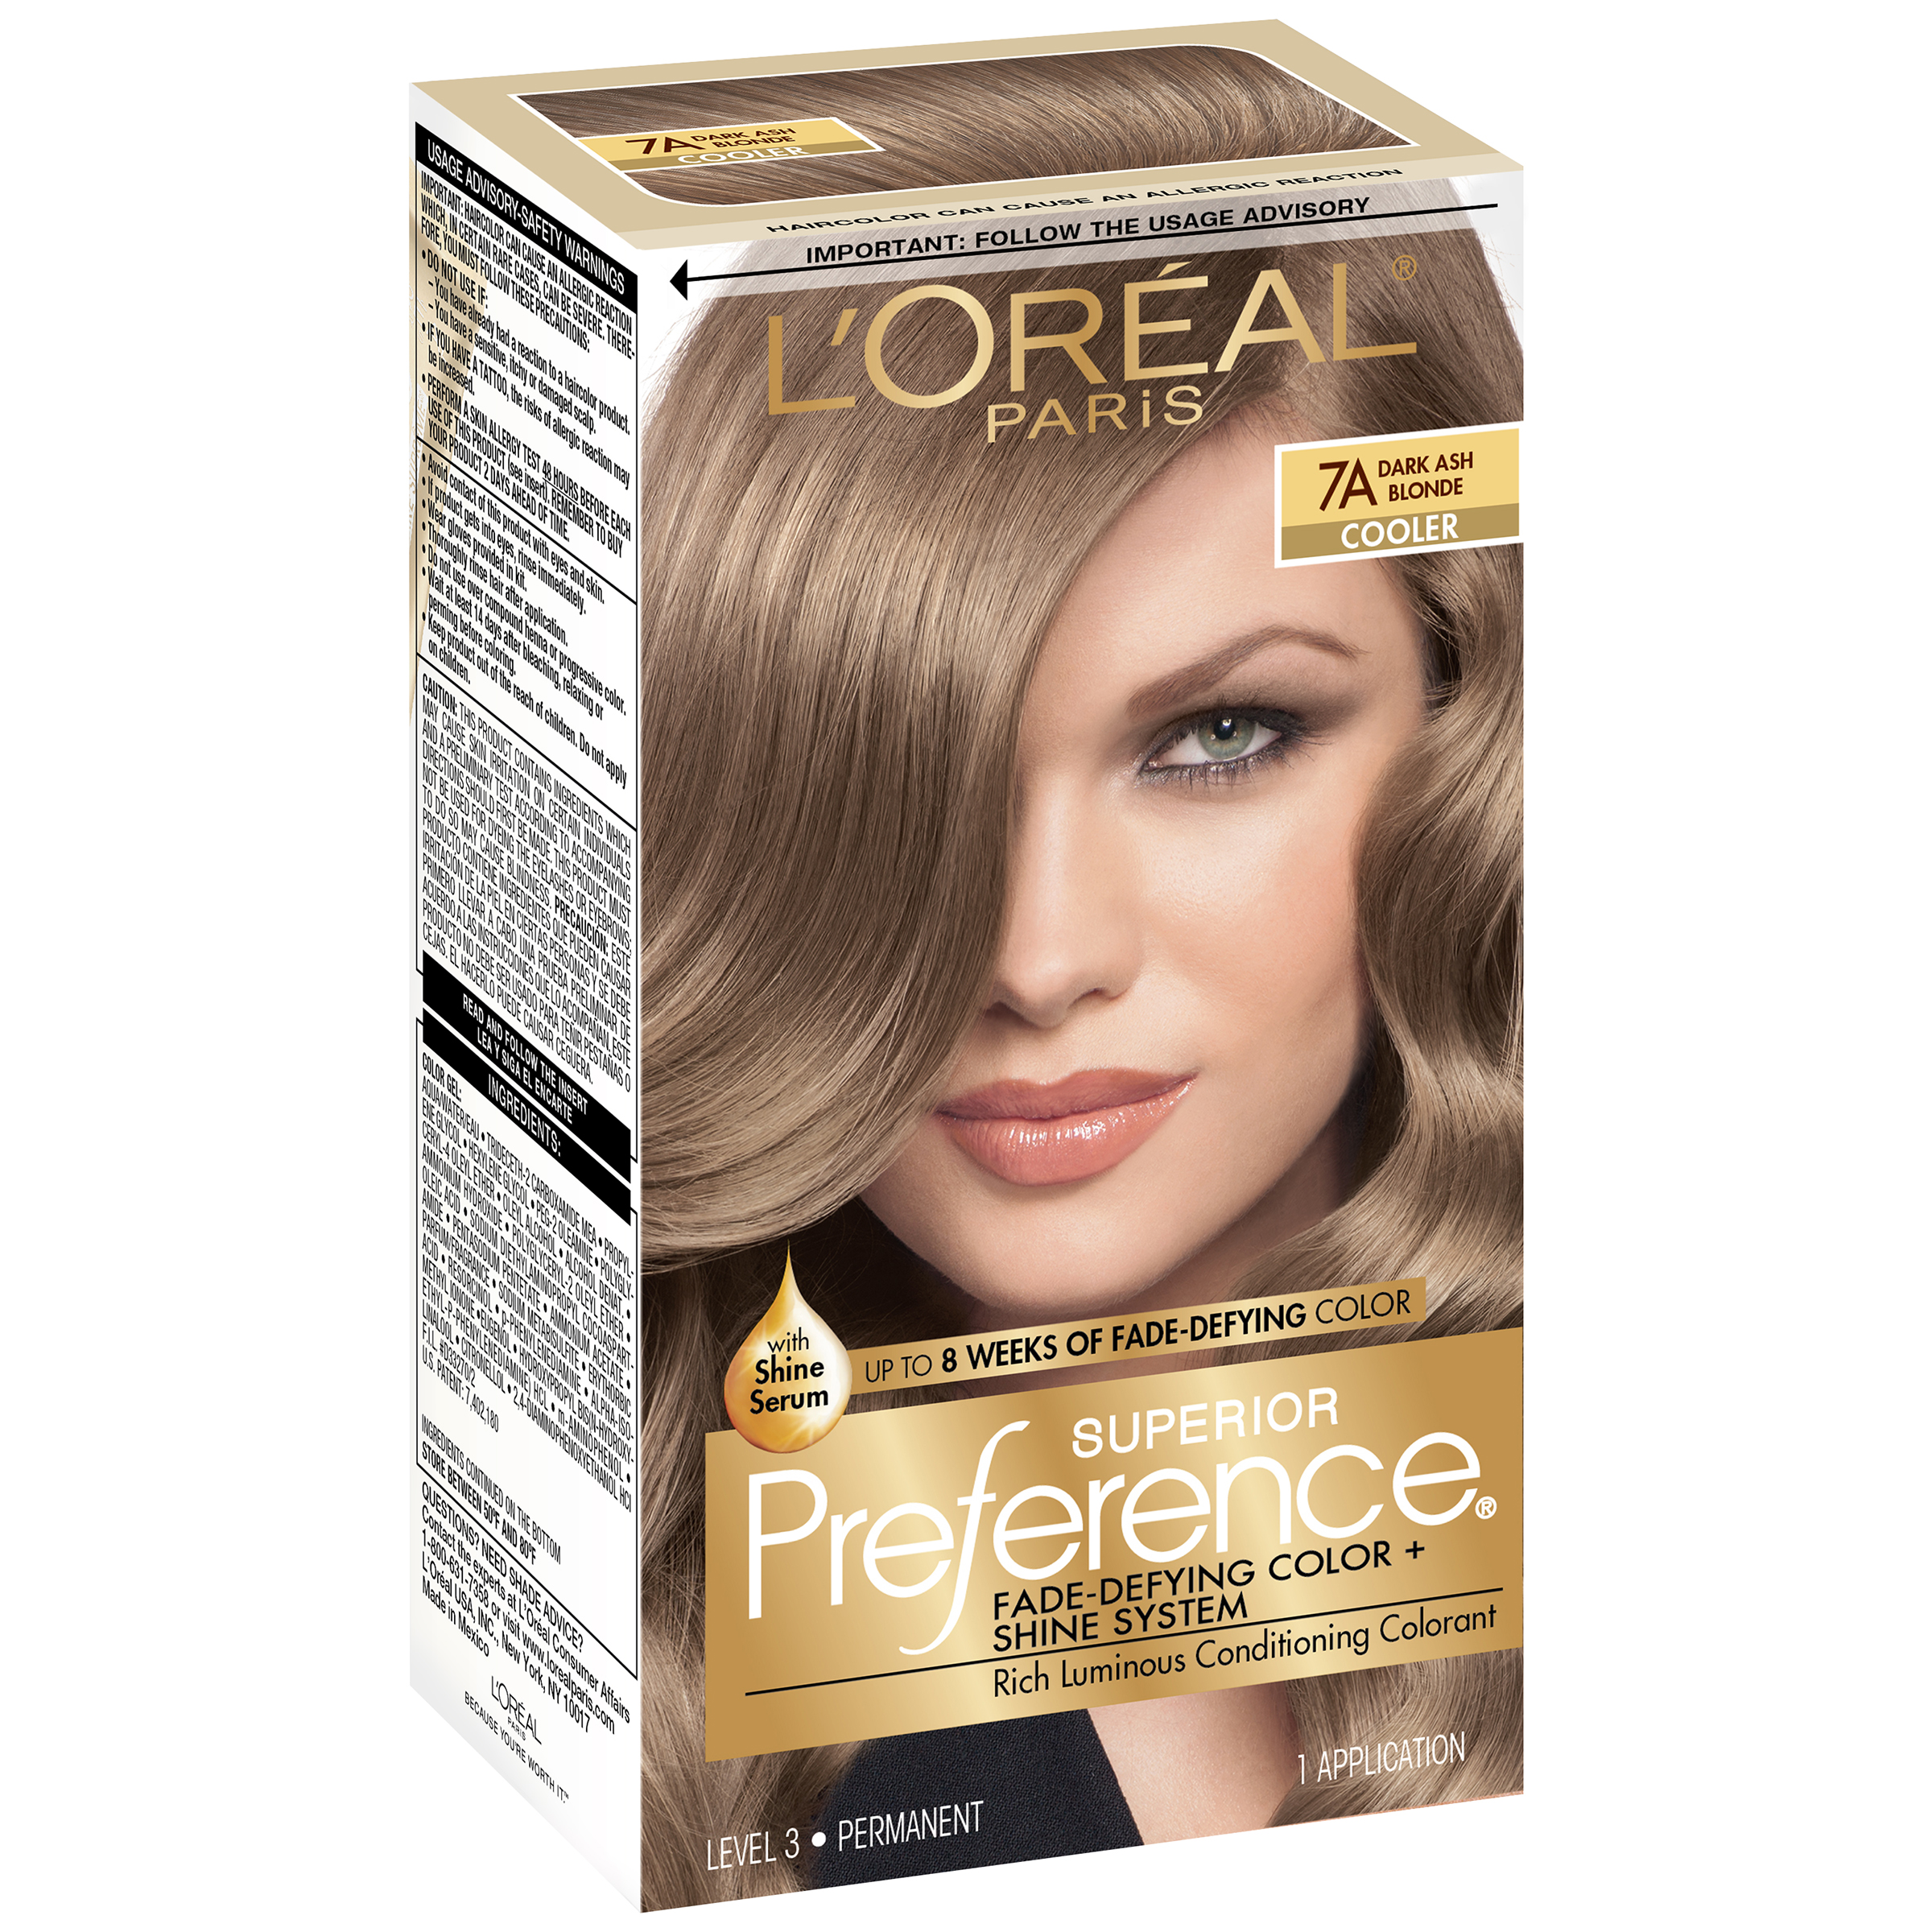 L'Oreal Paris® Superior Preference® Hair Color Kit